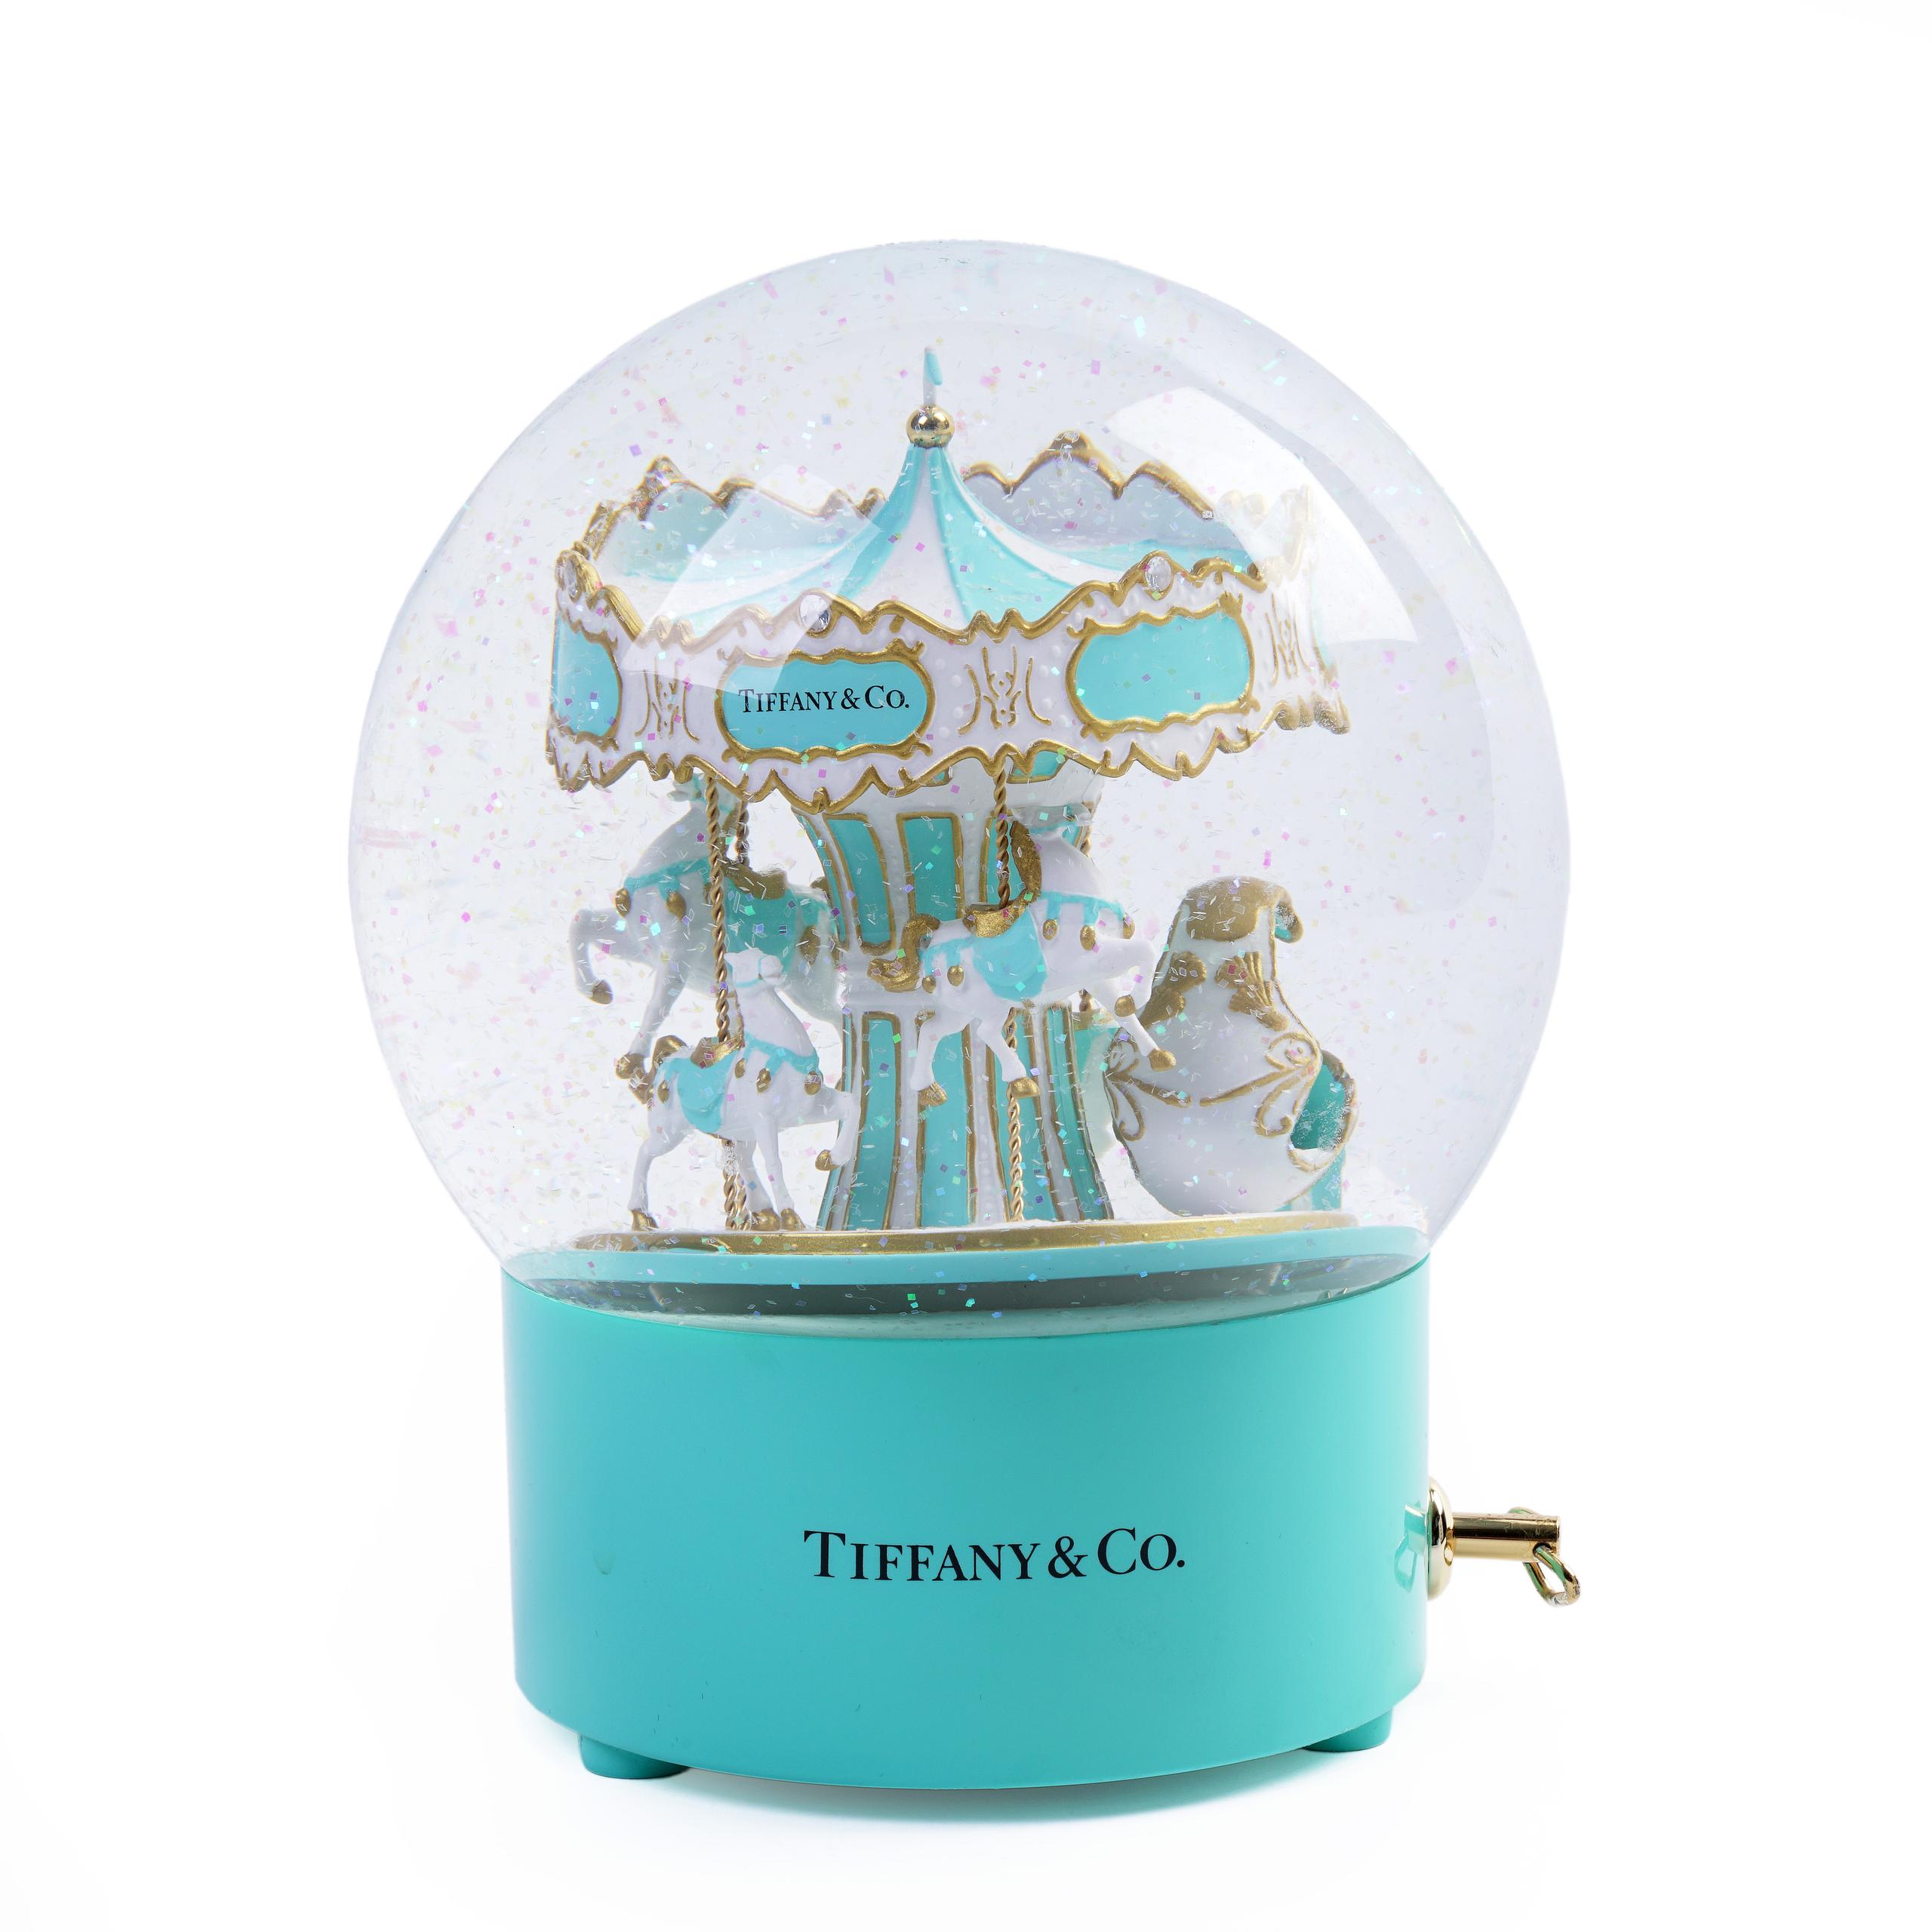 Sold at Auction: TIFFANY & CO Tiffany & Co snow globe in pexiglas